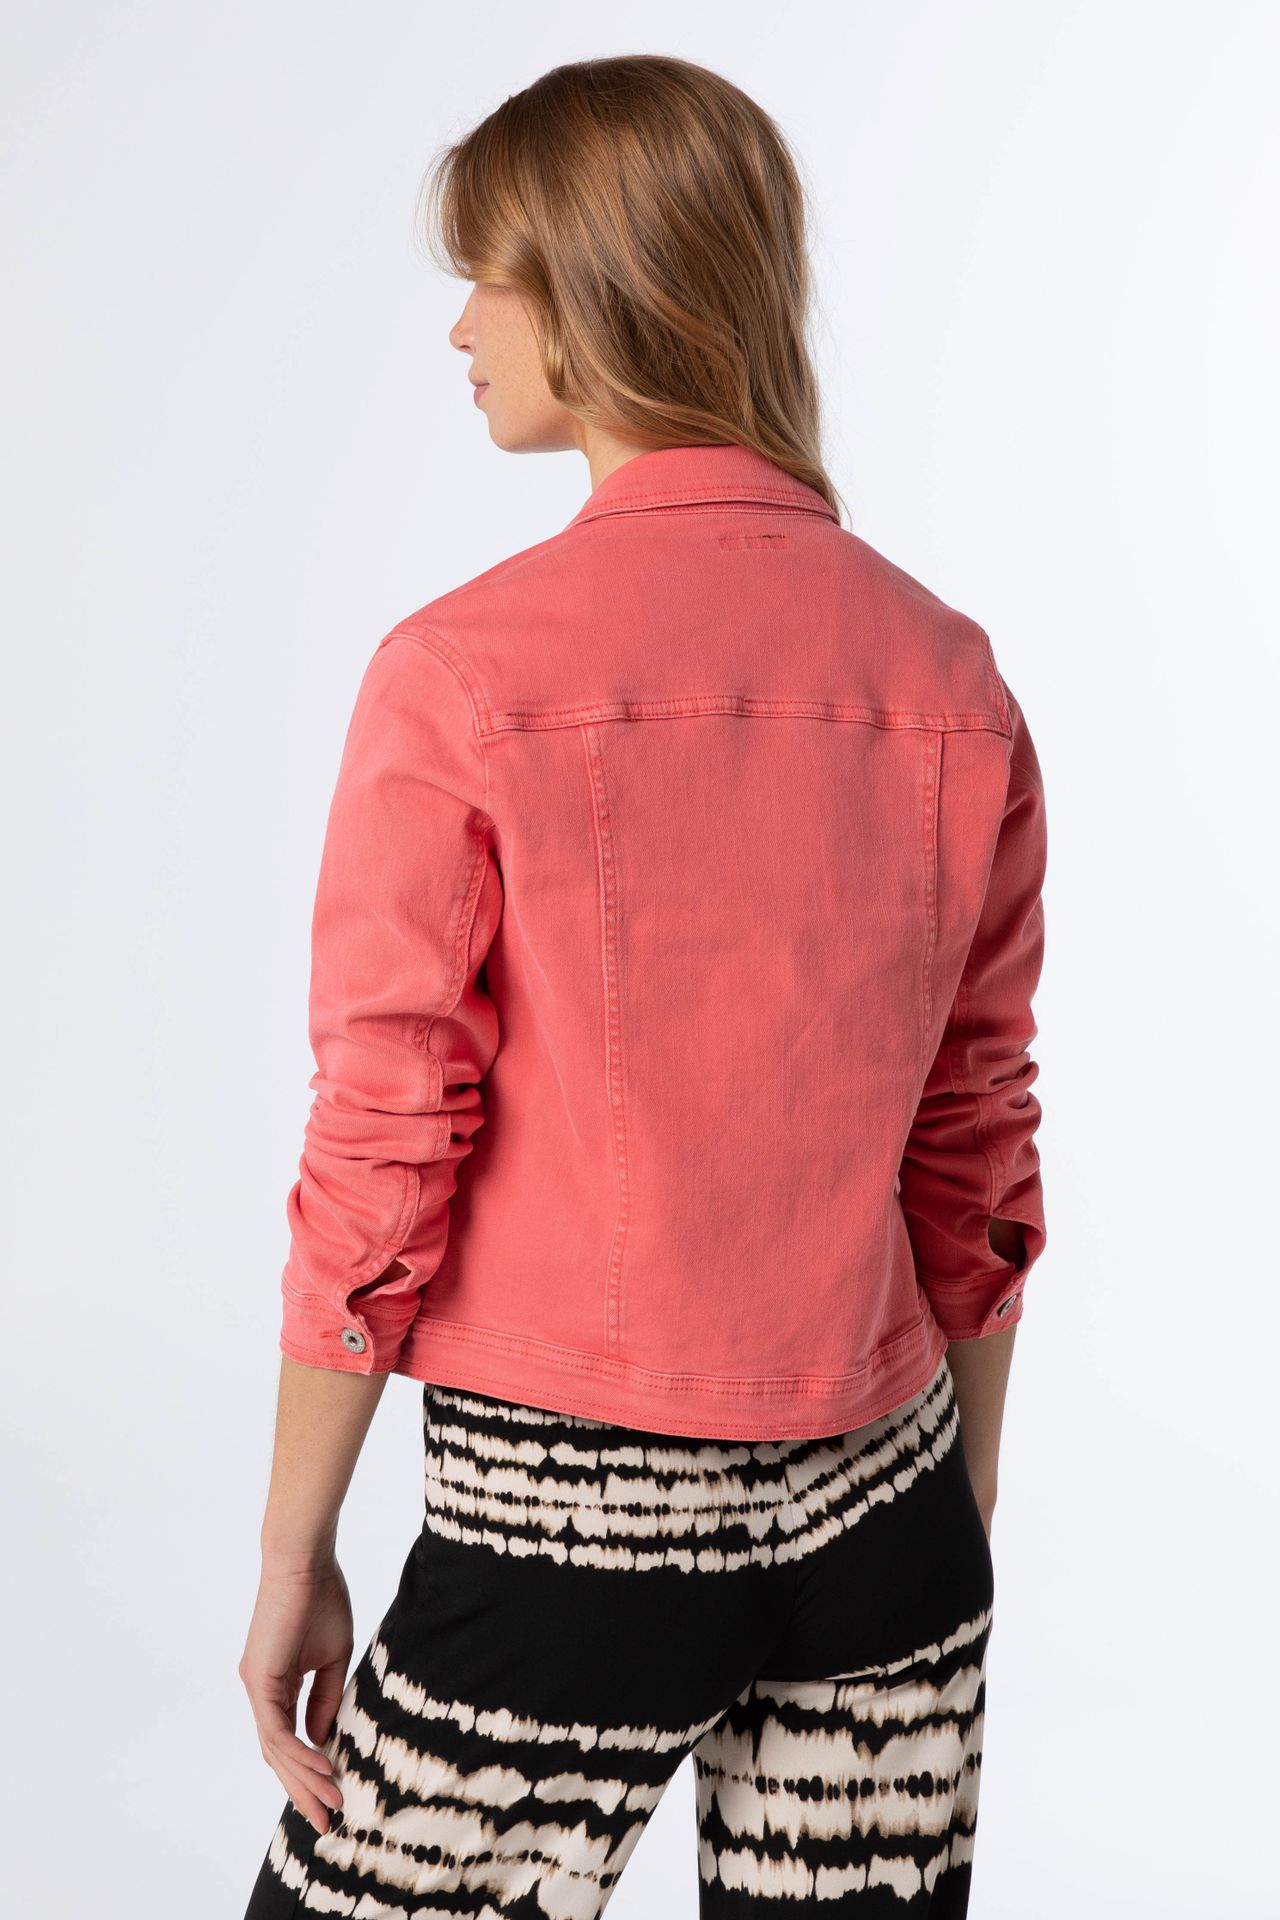 Norah Denim jacket roze coral 212557-706